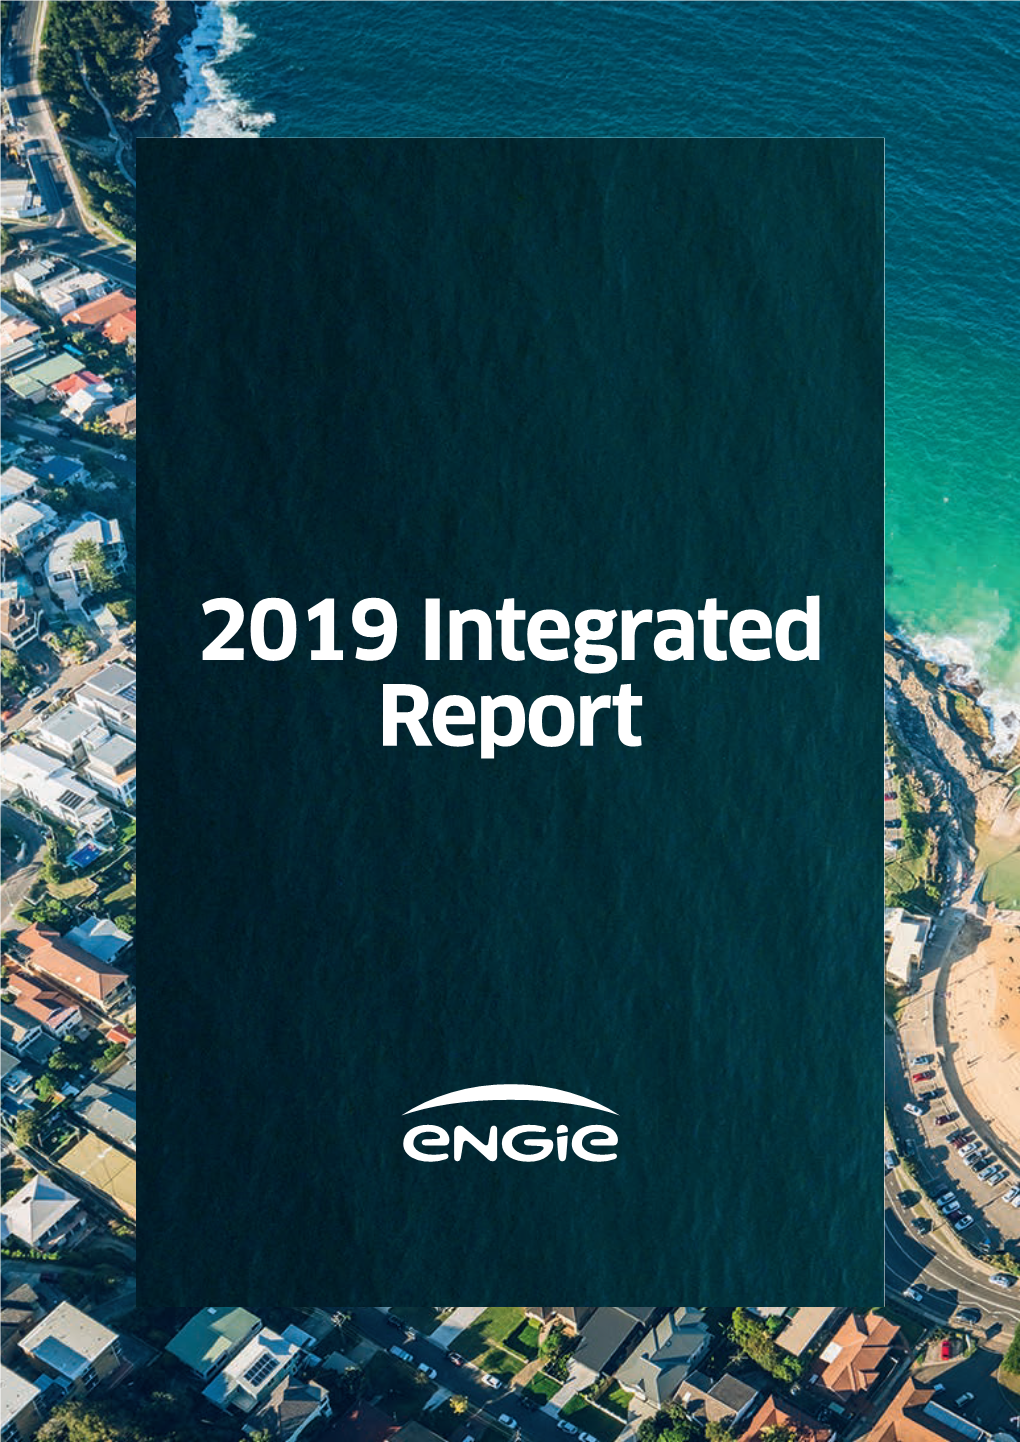 2019 Integrated Report ENGIE RI 2019 VA V2 12/06/2019 17:14 Pageii